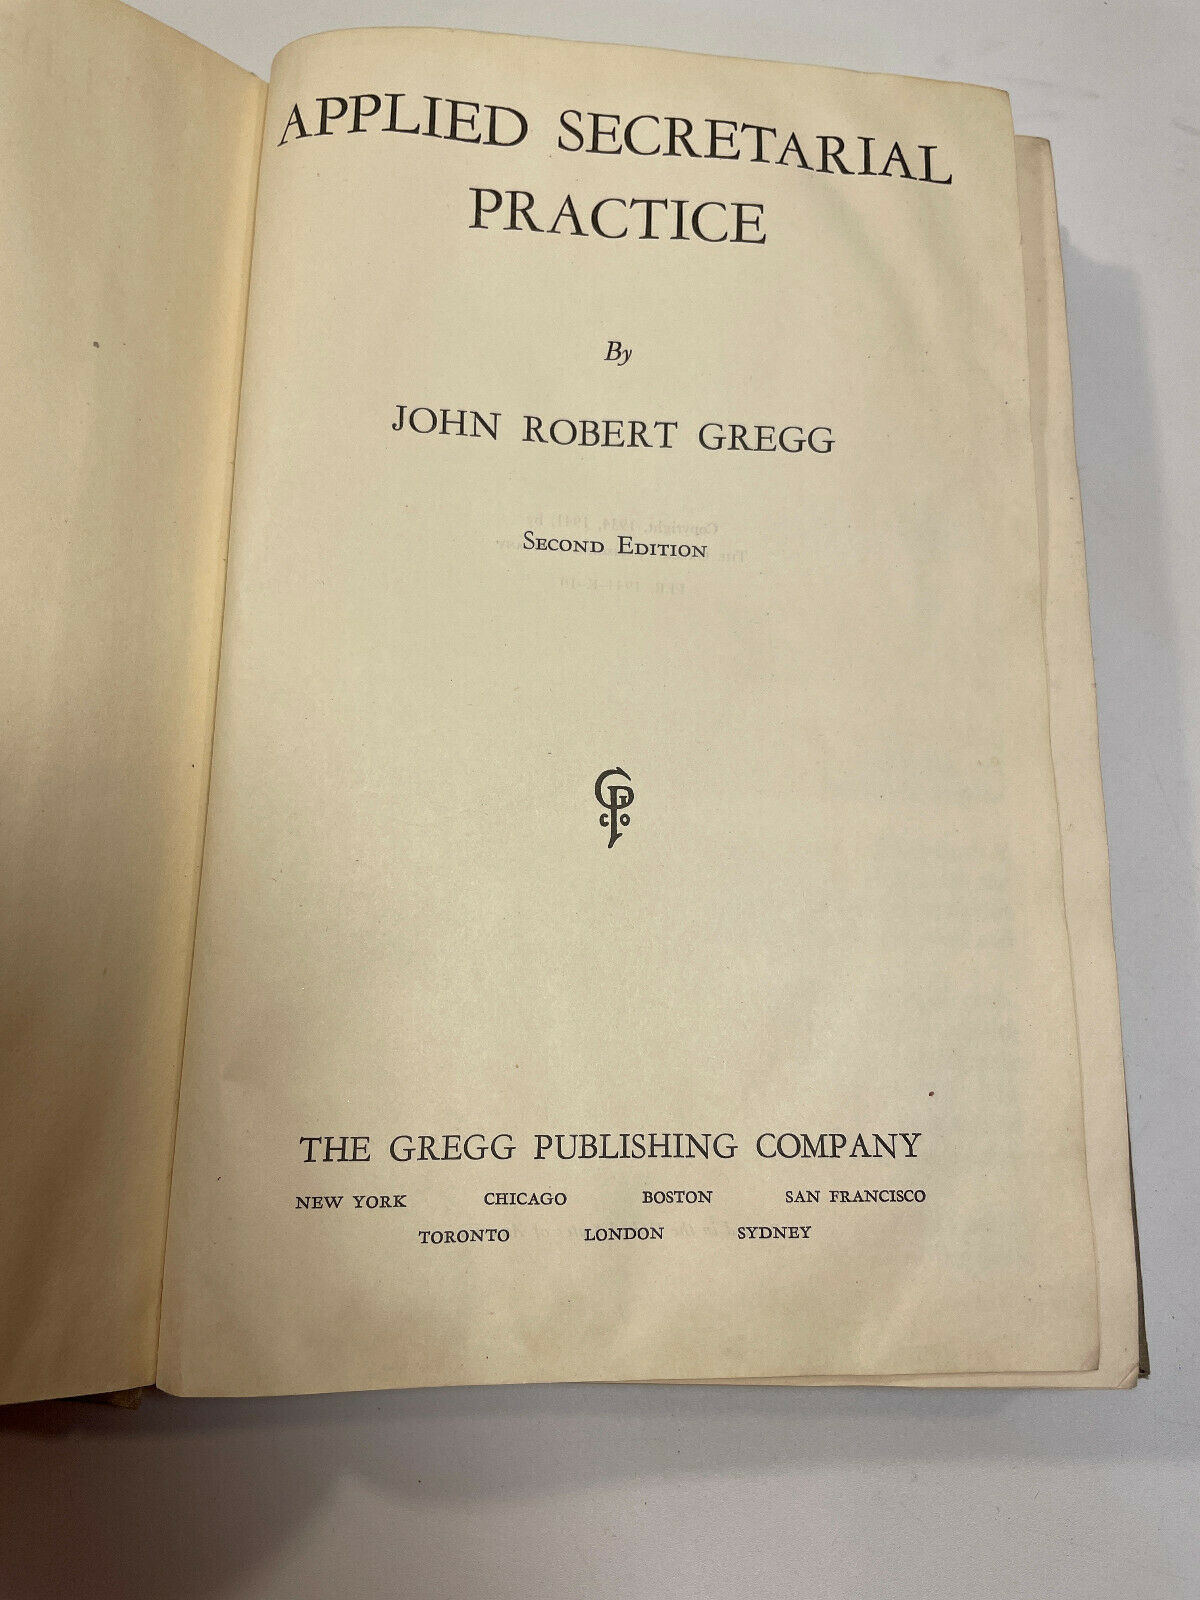 Applied Secretarial Practice Second Edition by John Robert Gregg